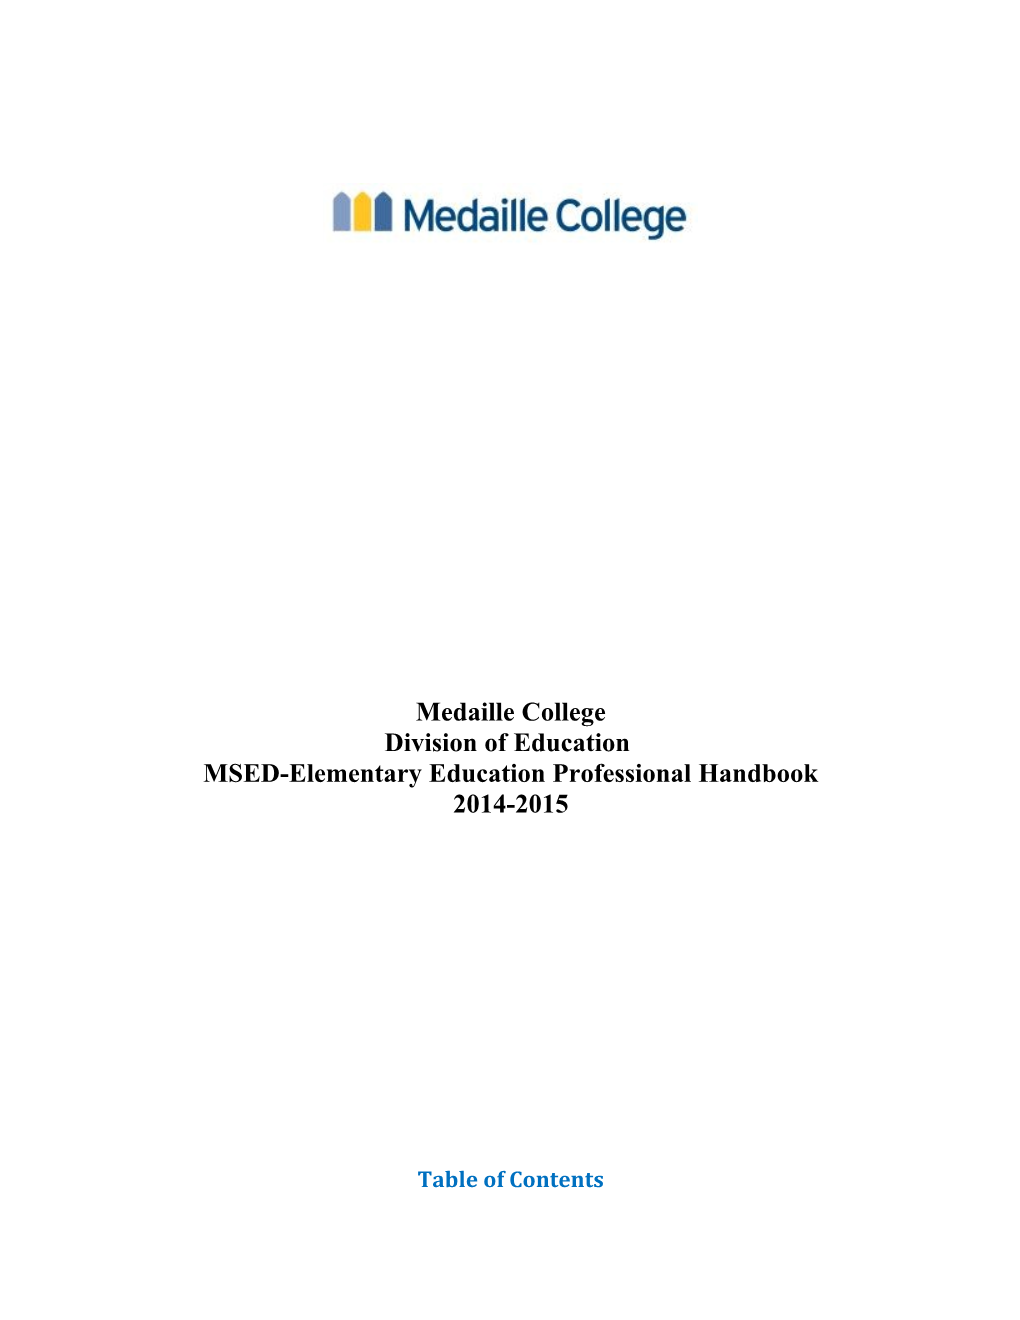 MSED-Elementary Education Professional Handbook